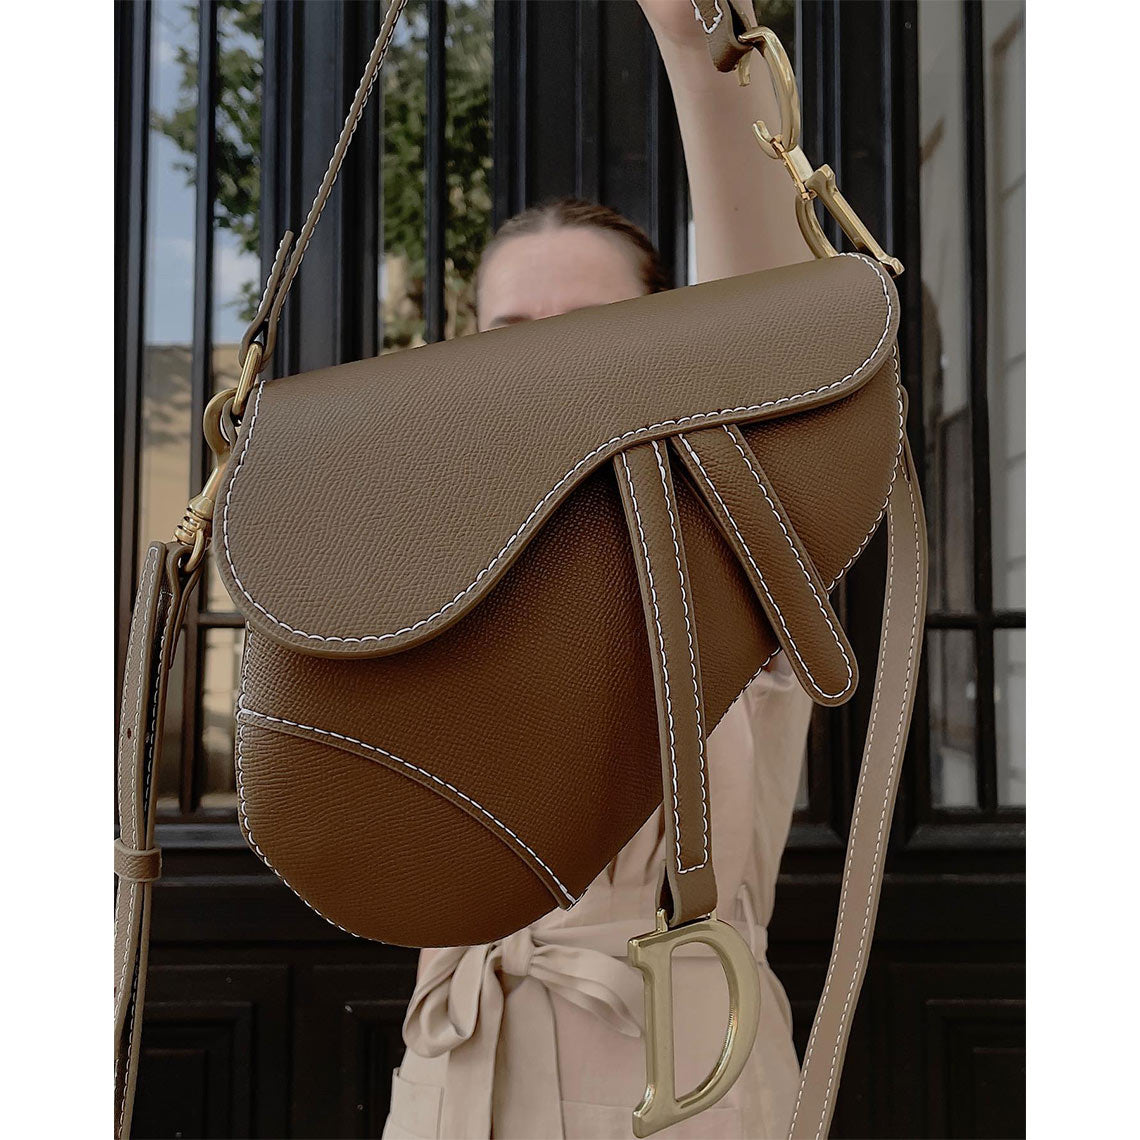 POPSEWING® Lady Leather Crossbody Saddle Bag DIY Kit | 15% Price Drop at Checkout